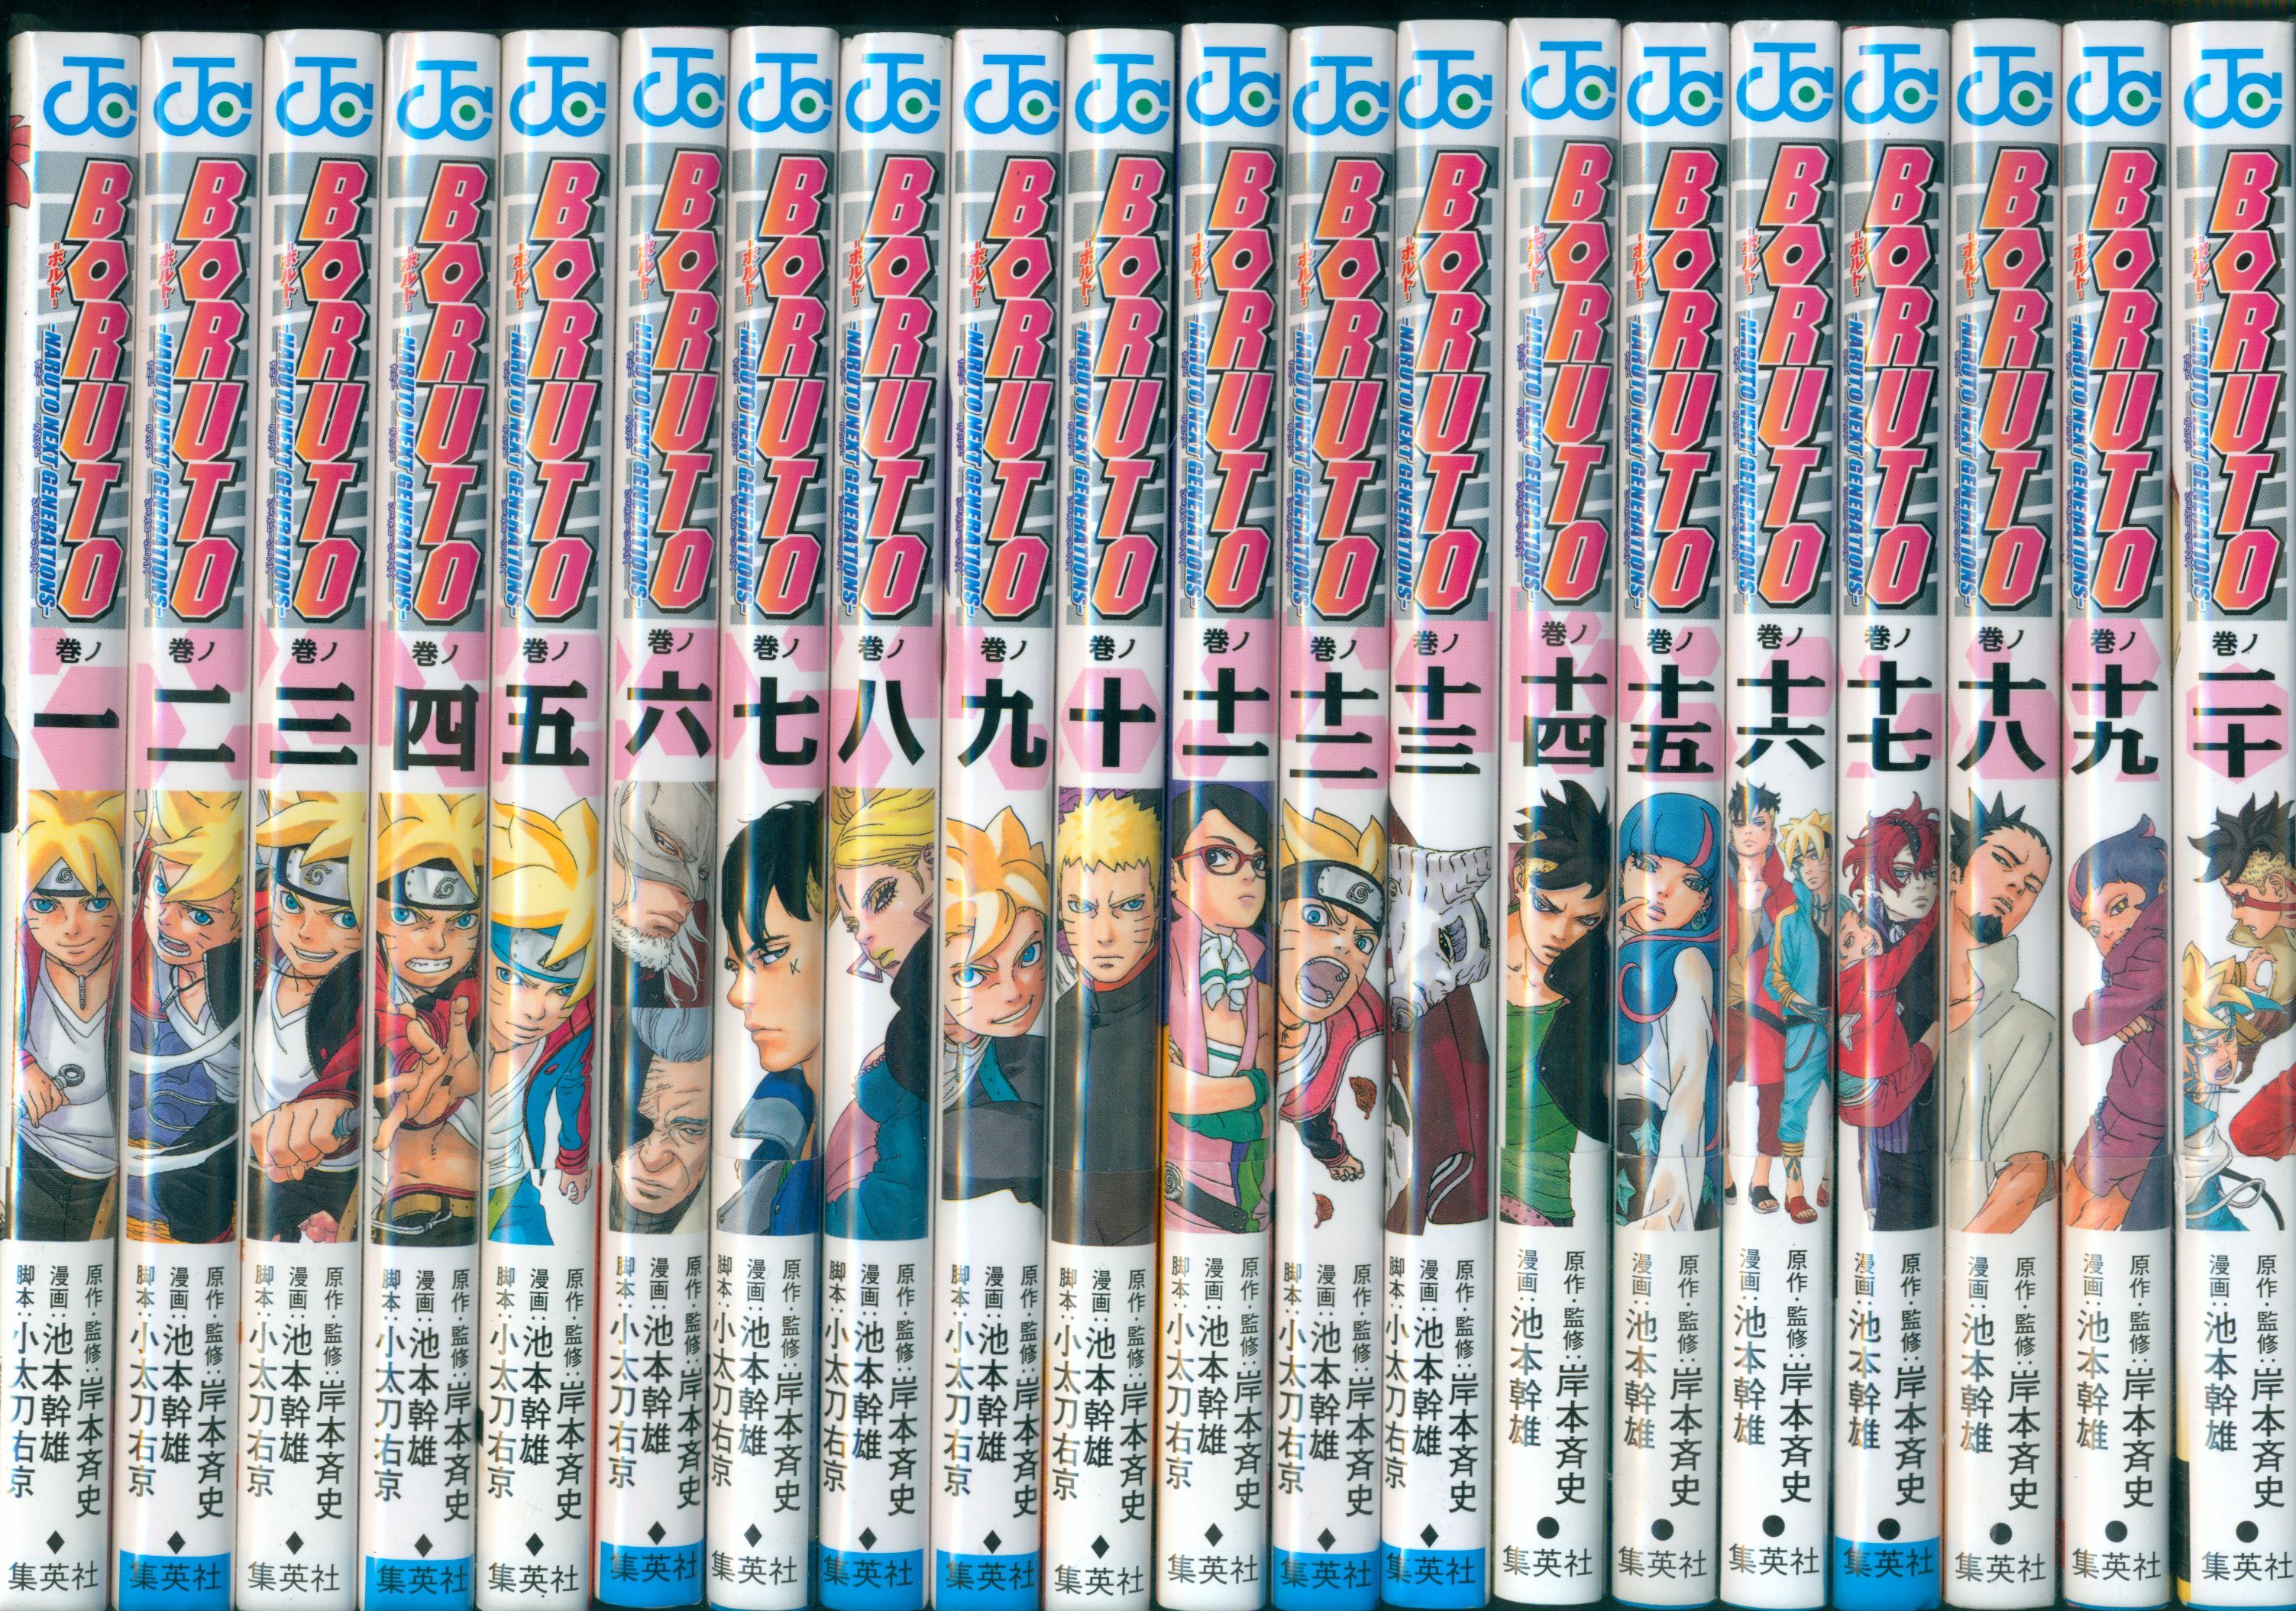 BORUTO NARUTO NEXT GENERATIONS Vol. 1-20 Japanese Comics Manga NEW - F/S